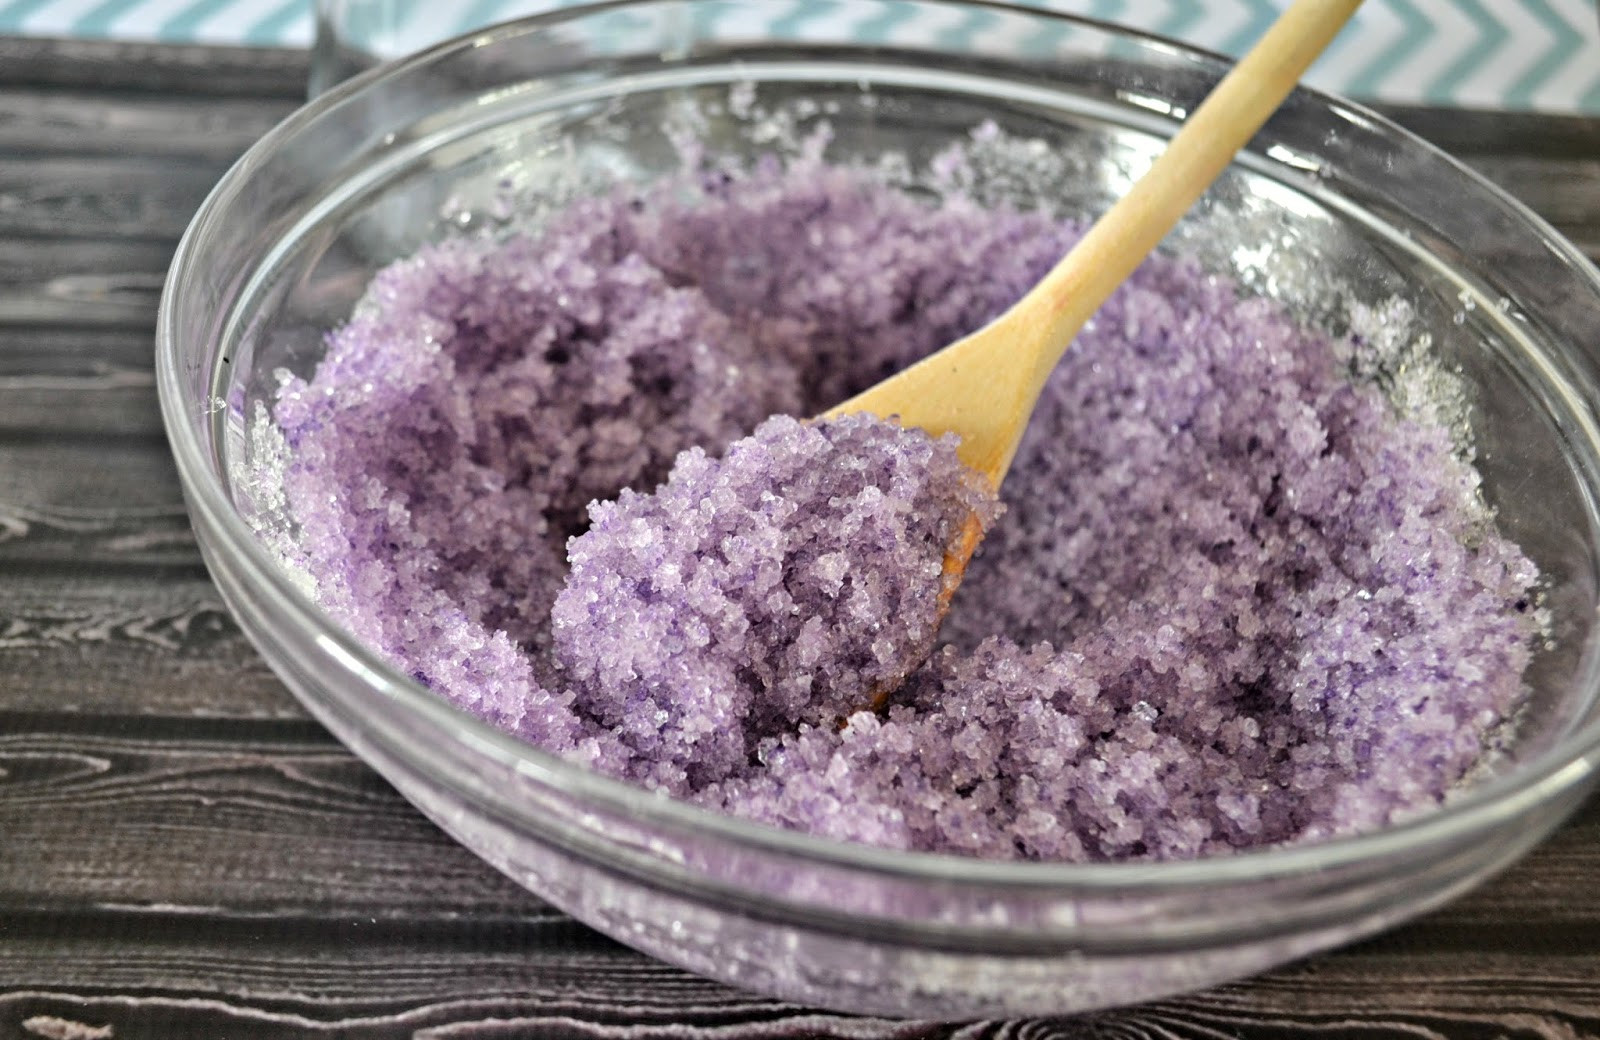 Best ideas about DIY Salt Scrub
. Save or Pin Lavender Vanilla Salt Scrub DIY Now.